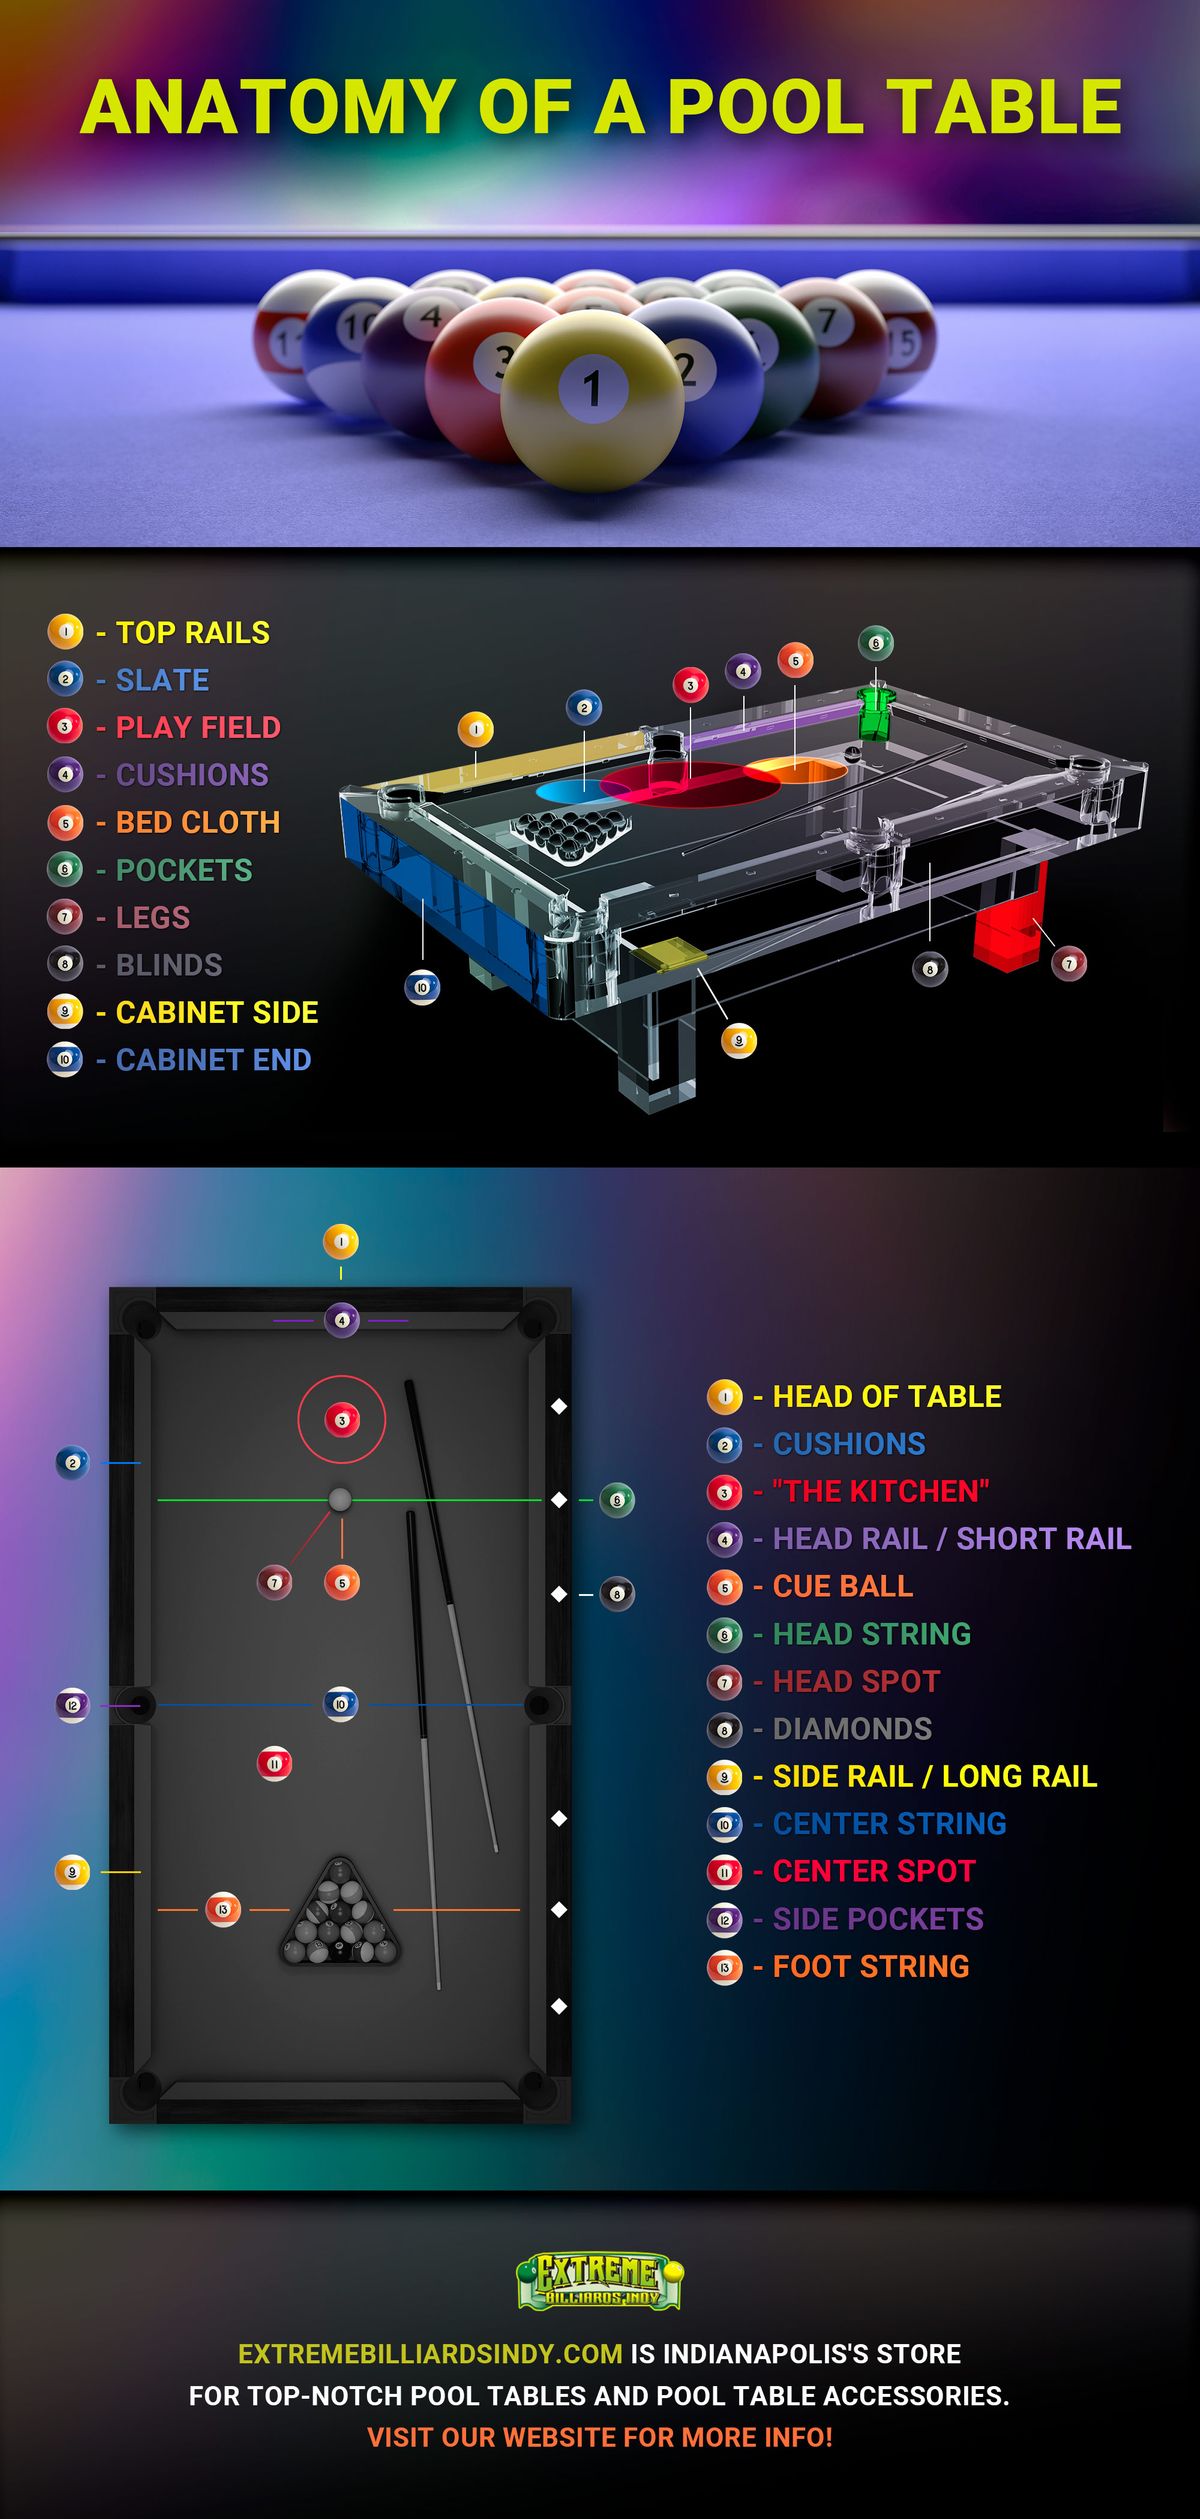 Anatomy-of-a-Pool-Table-5e3d8c8323663.jpg